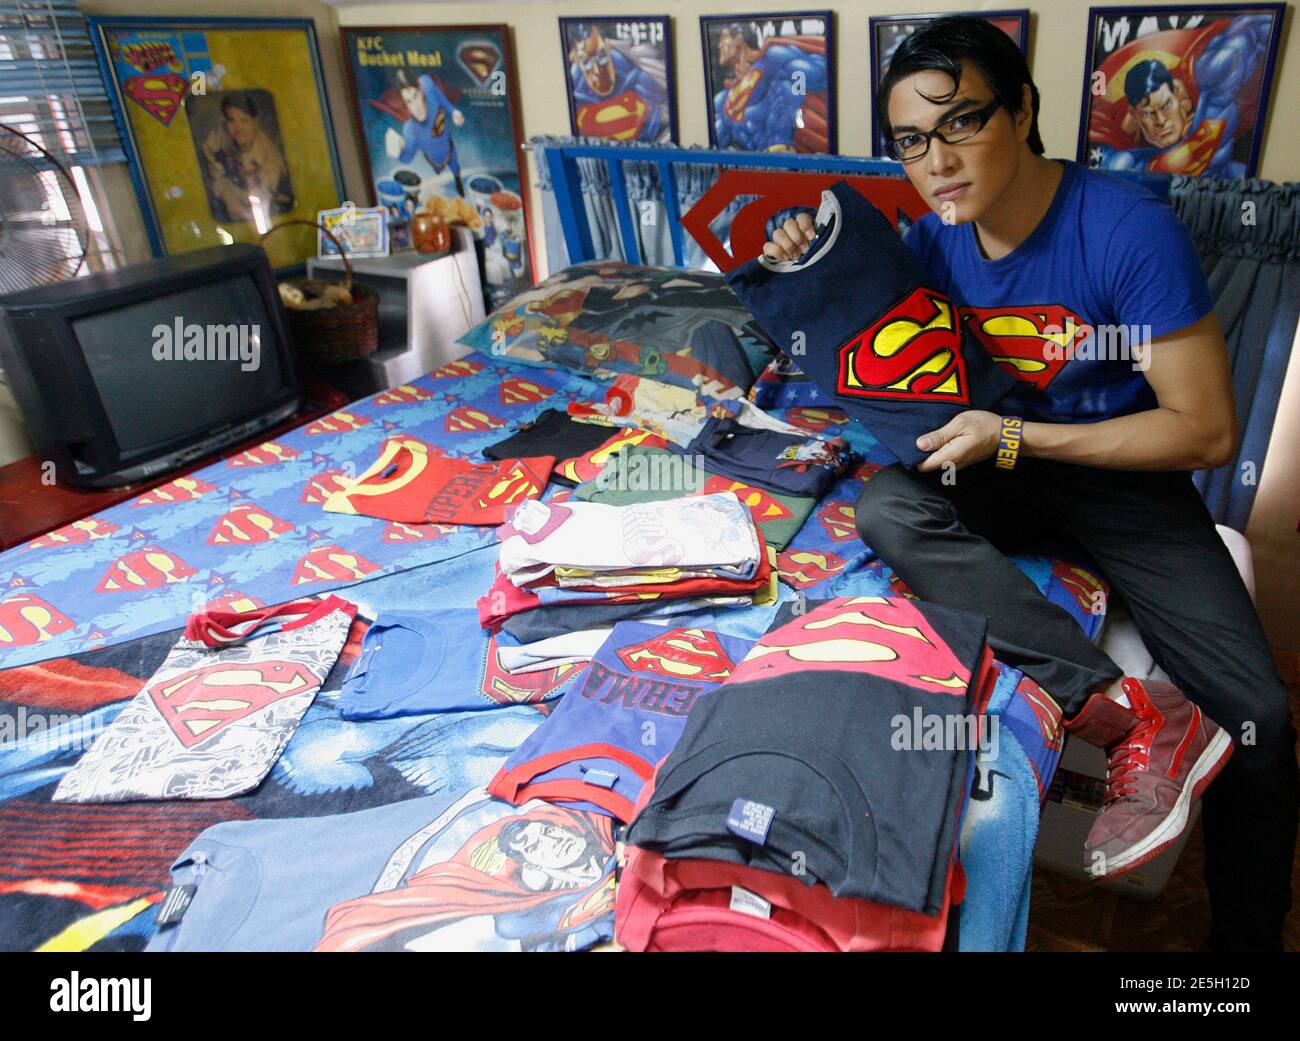 Superman Super Booth Adult Work Shirt 